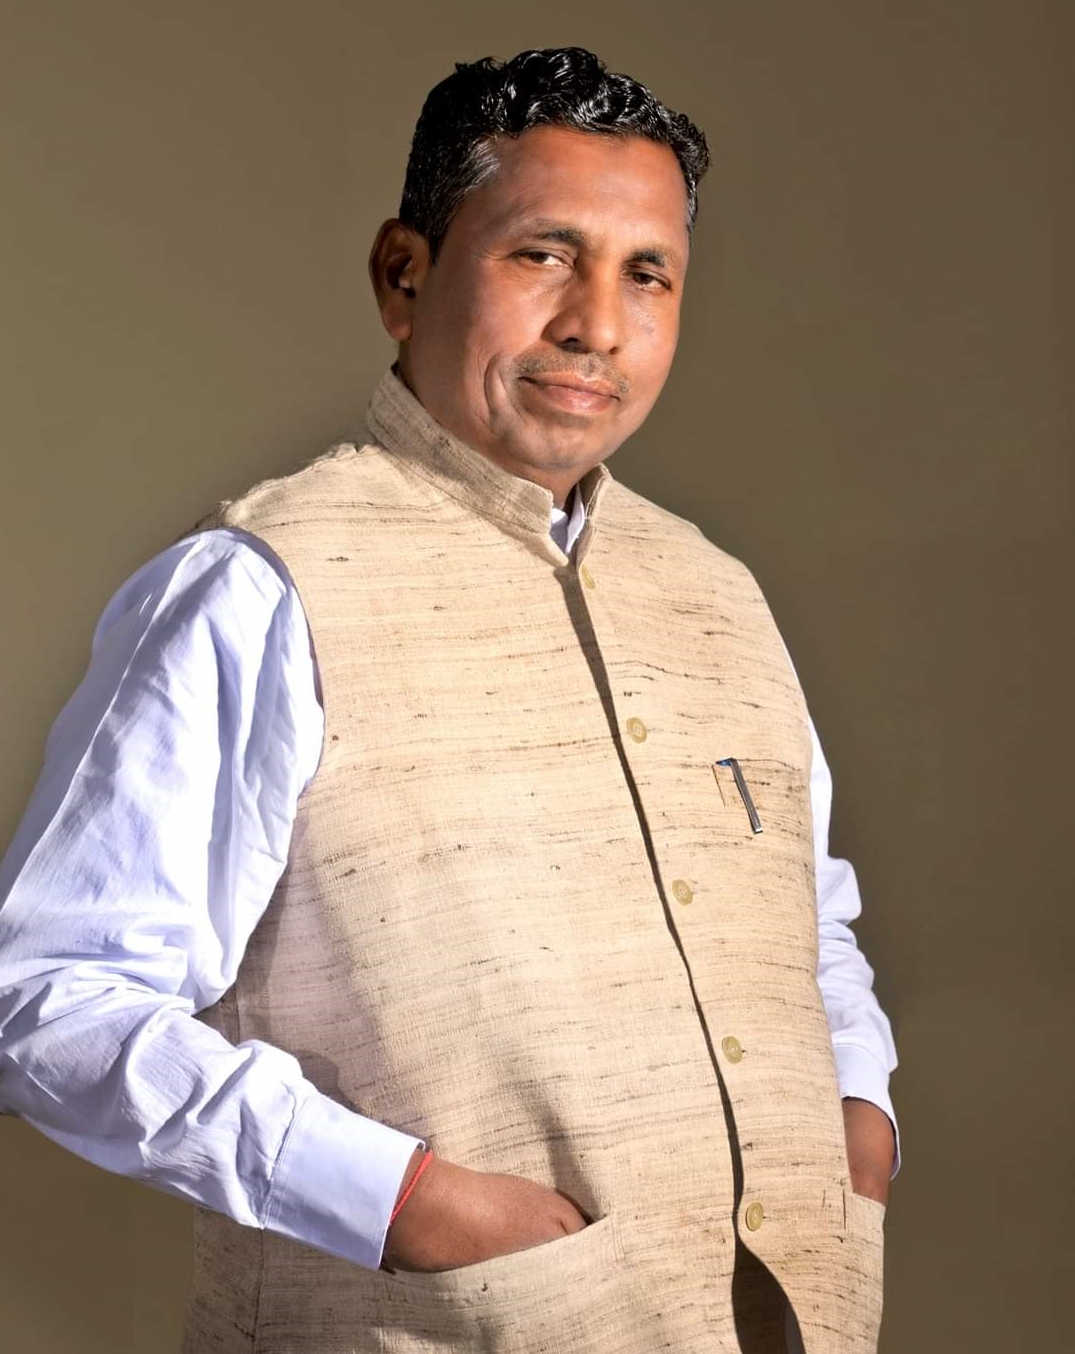 Congress Leader KH Muniyappa